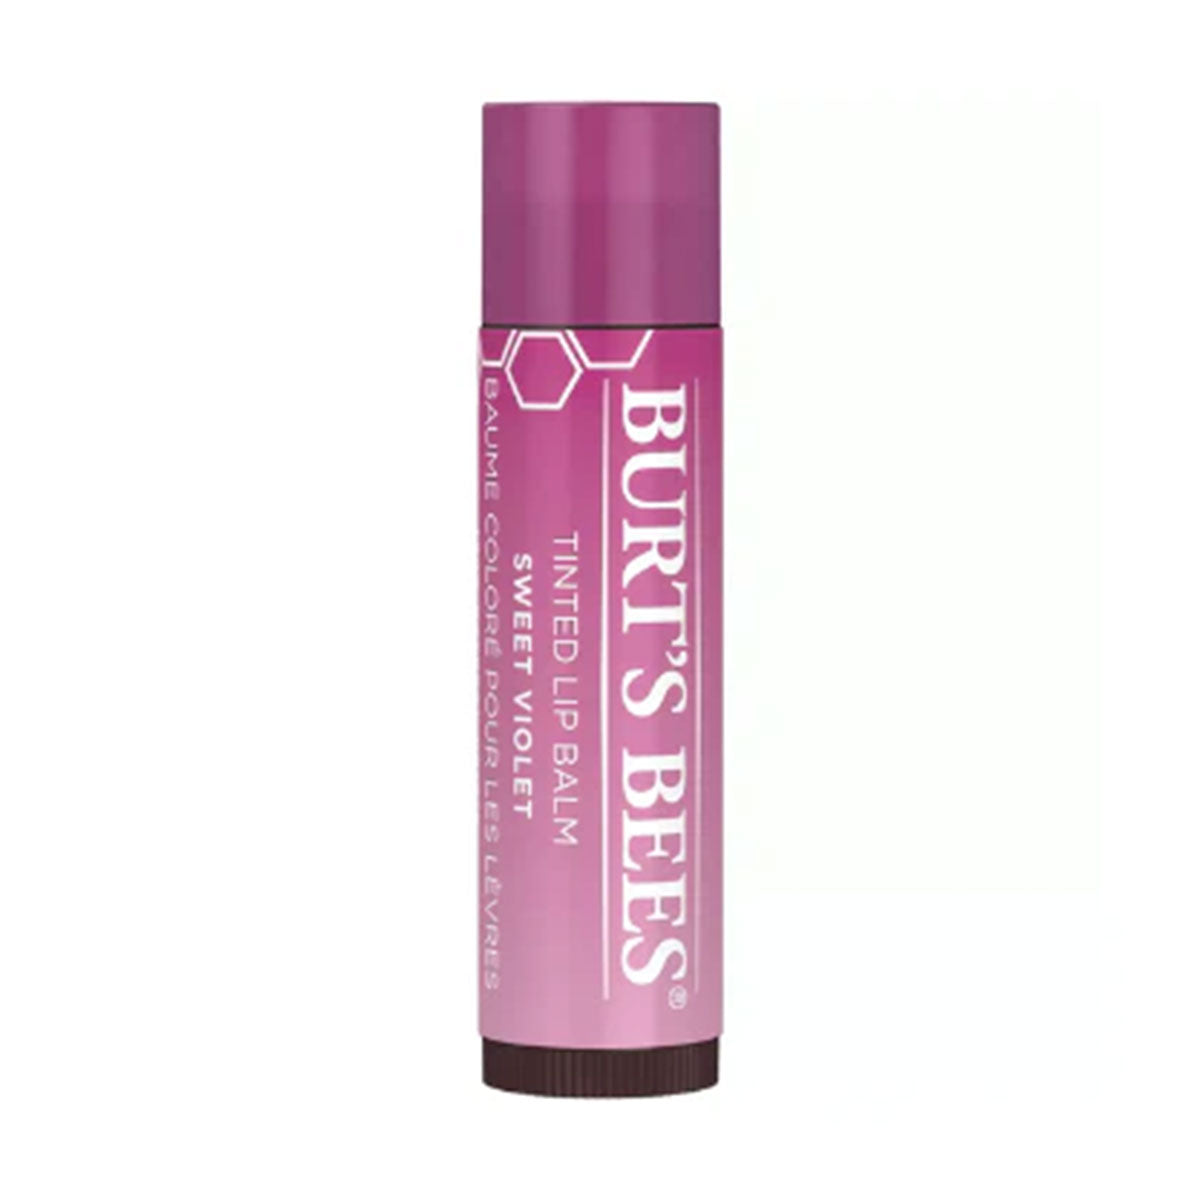 Bálsamo labial Tinted Lip Balm Sweet Violet Burt’s Bees 4 gr - 🐝🍃 producto 100% natural (Copy)